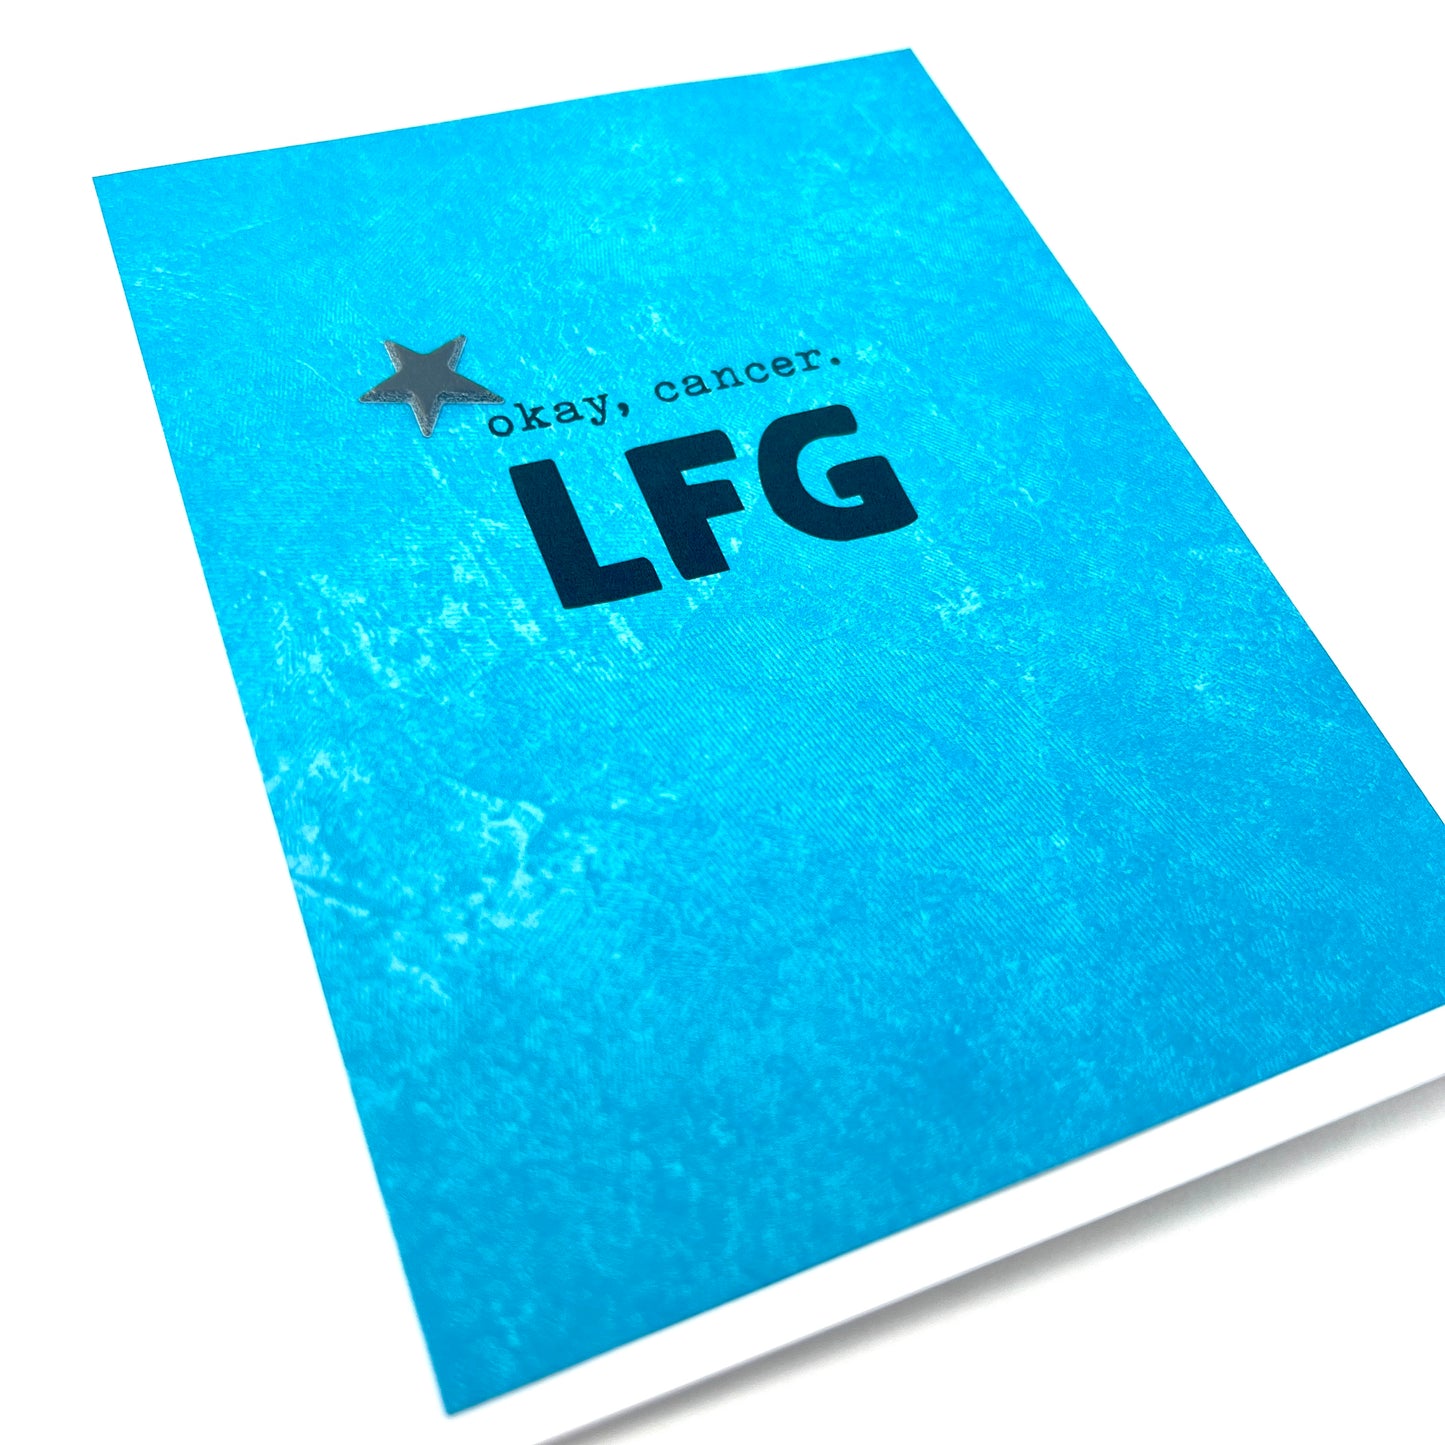 Cancer LFG (let’s fucking go) card